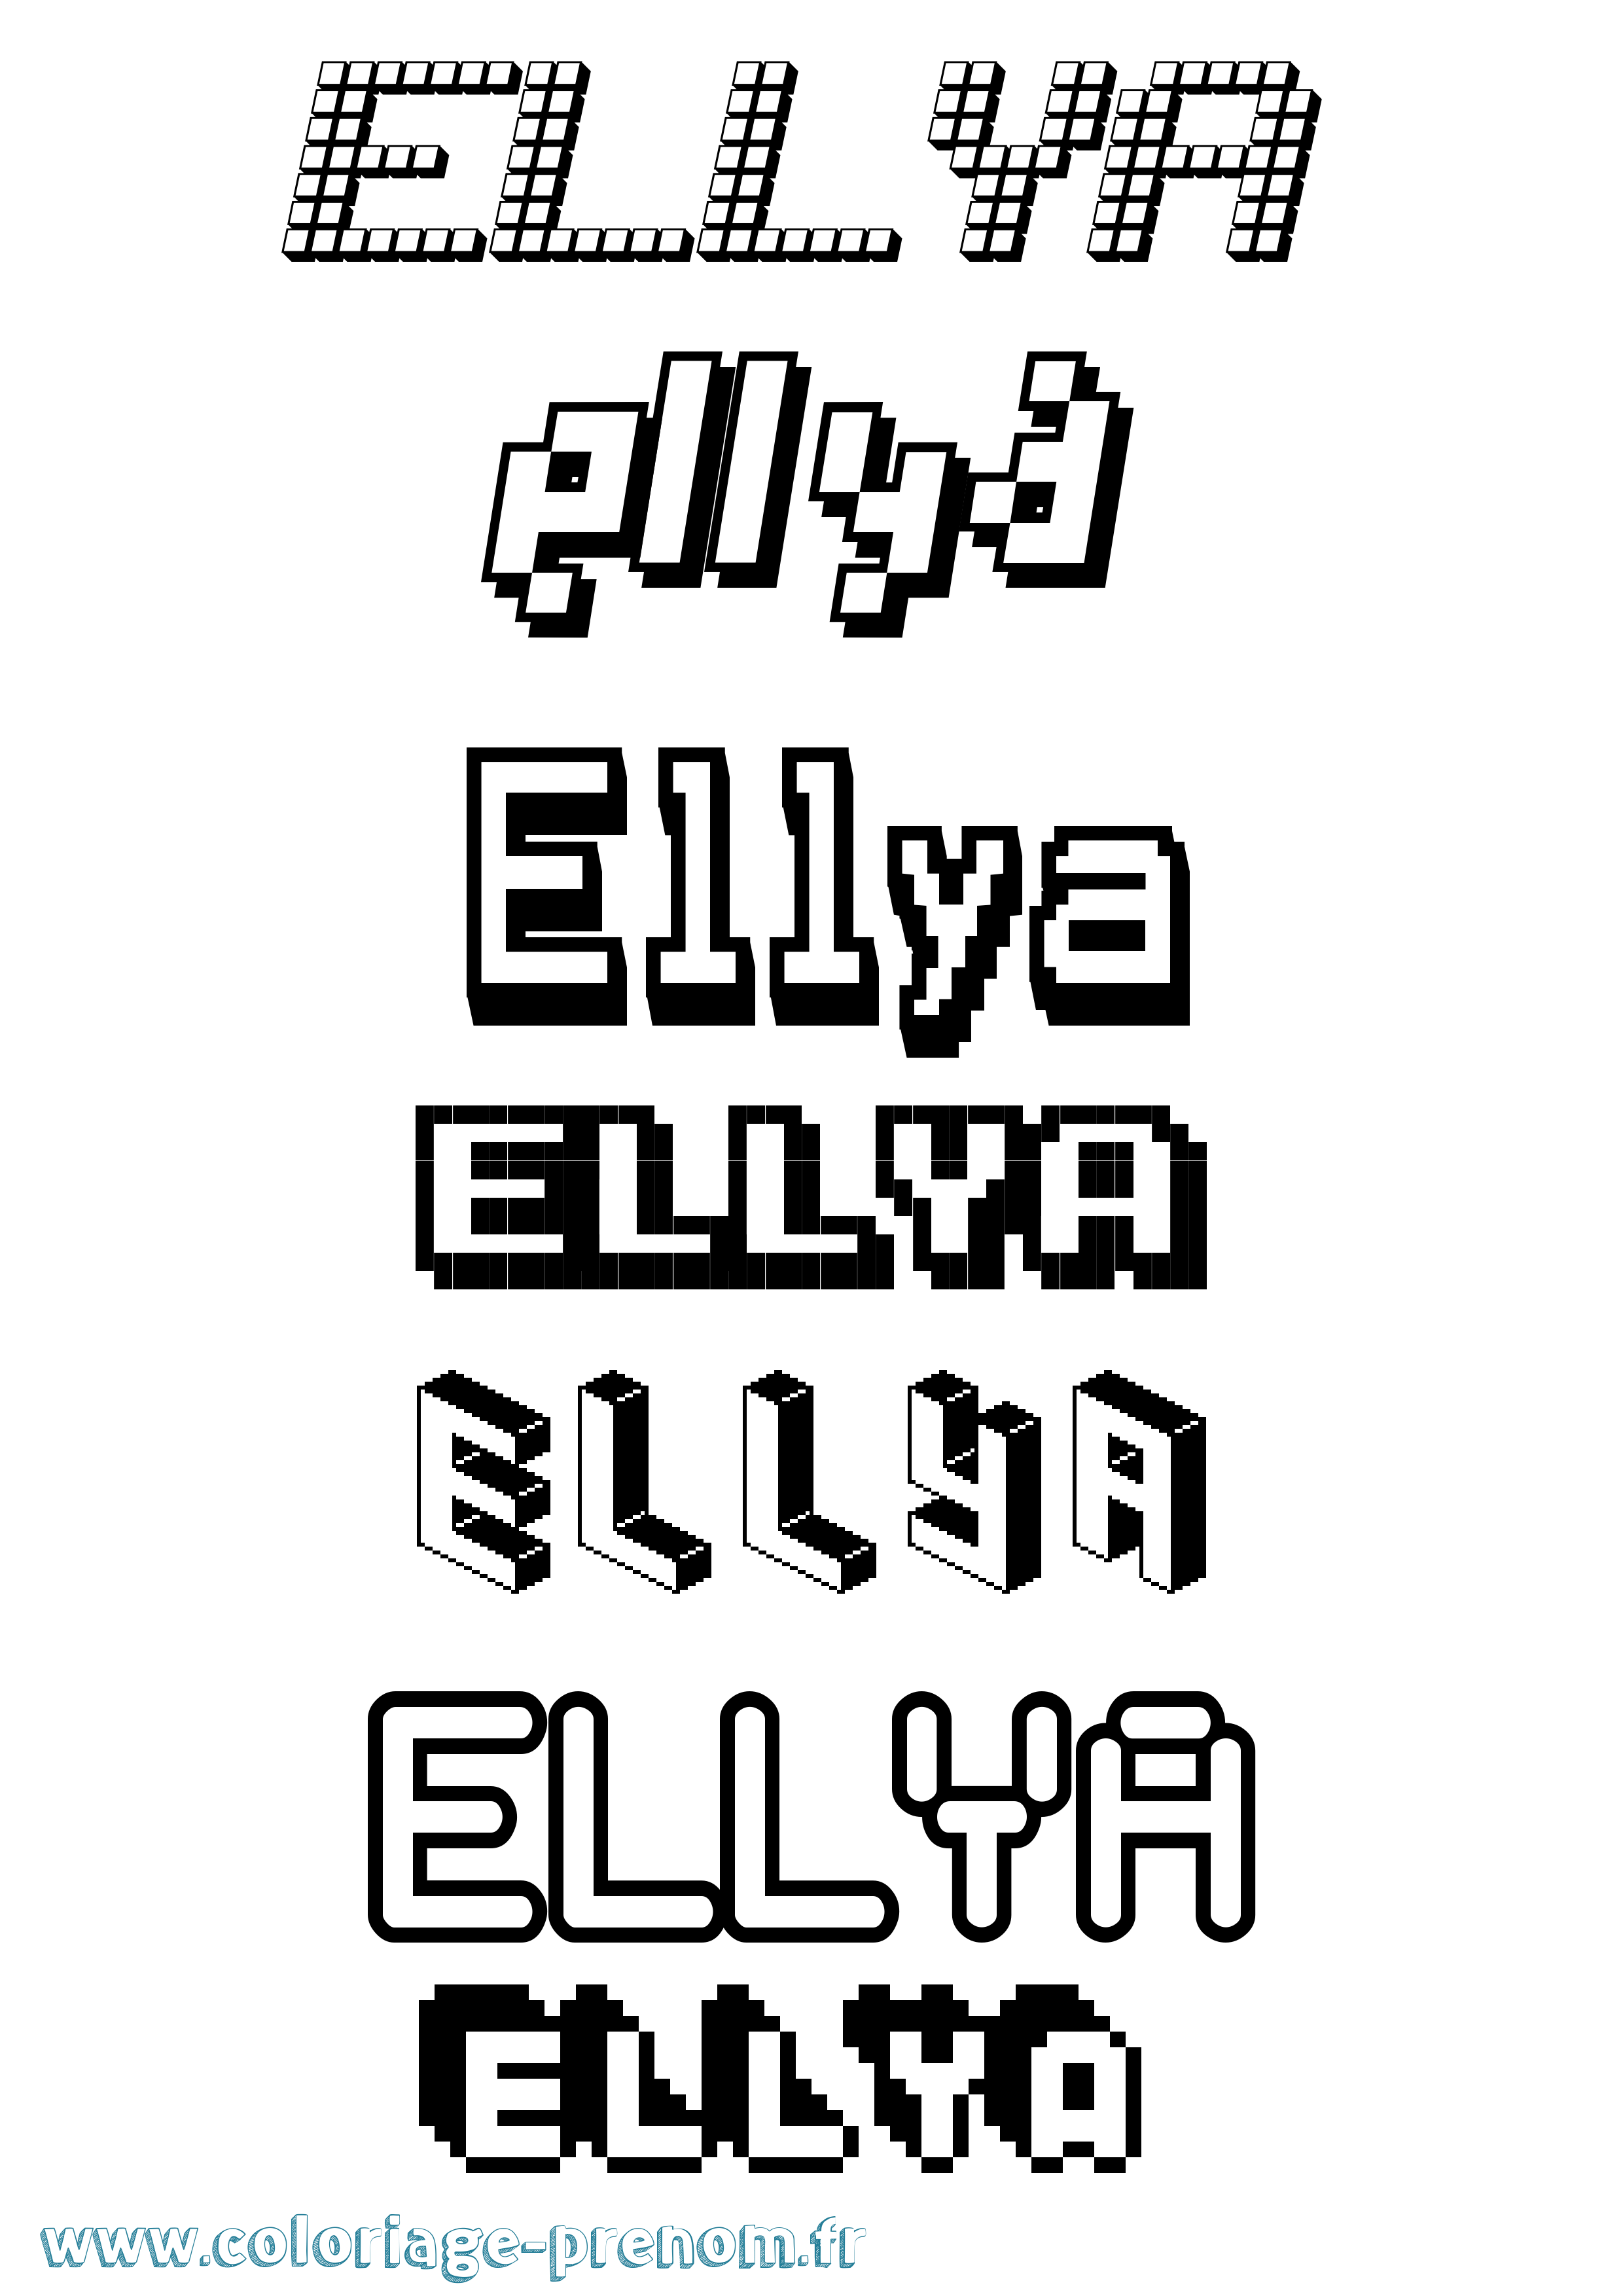 Coloriage prénom Ellya Pixel